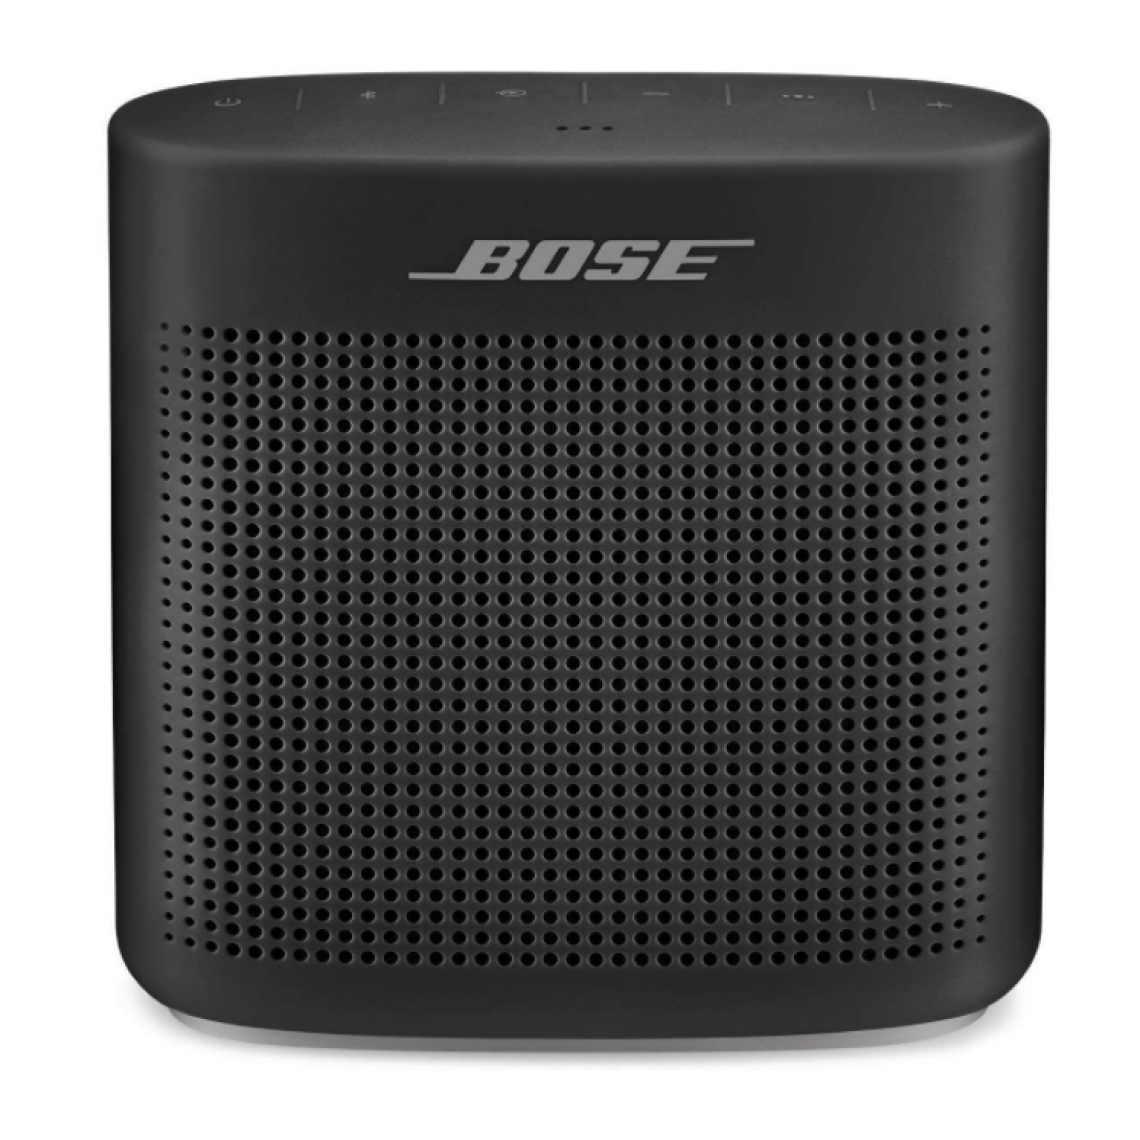 Chrono - Bose 752195-0200 Haut-parleur Bluetooth SoundLink couleur II(Noir) - Enceintes Hifi